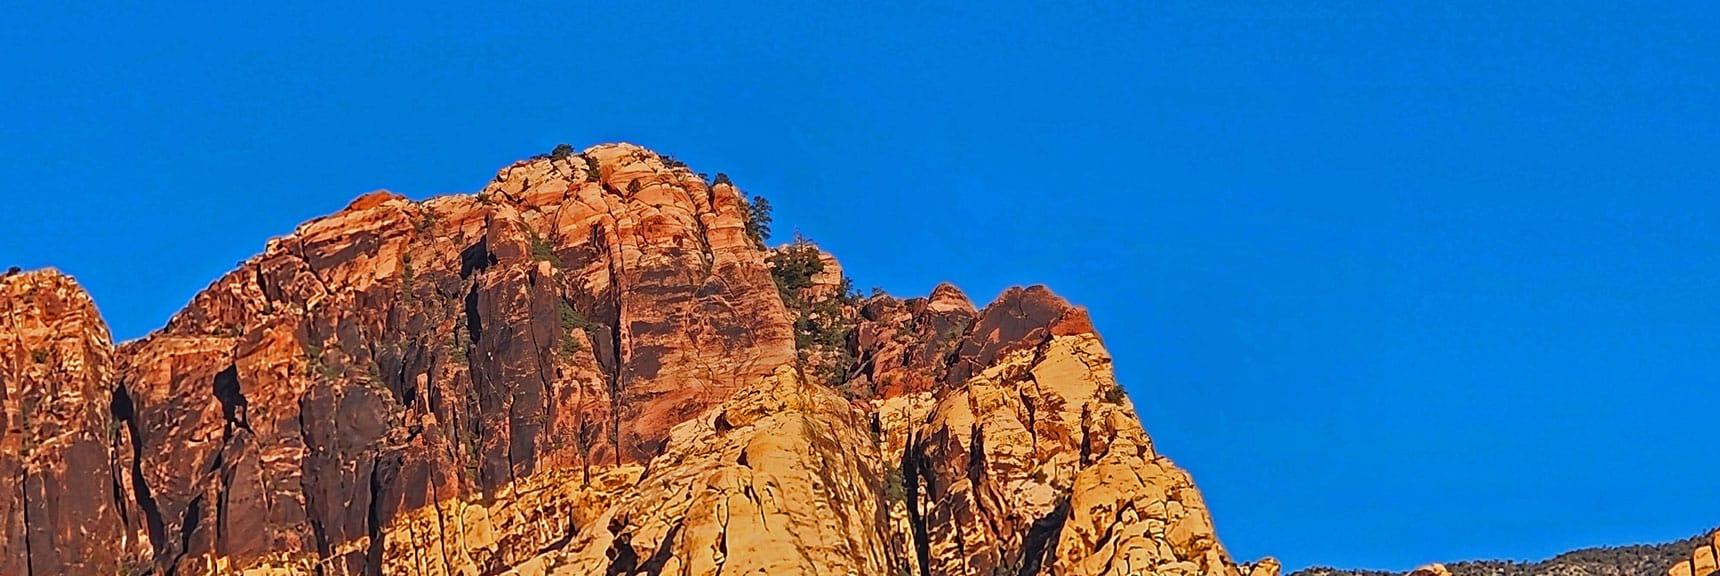 Close-Up View of Juniper Peak Summit | Knoll Trail | Red Rock Canyon National Conservation Area, Nevada | David Smith | LasVegasAreaTrails.com